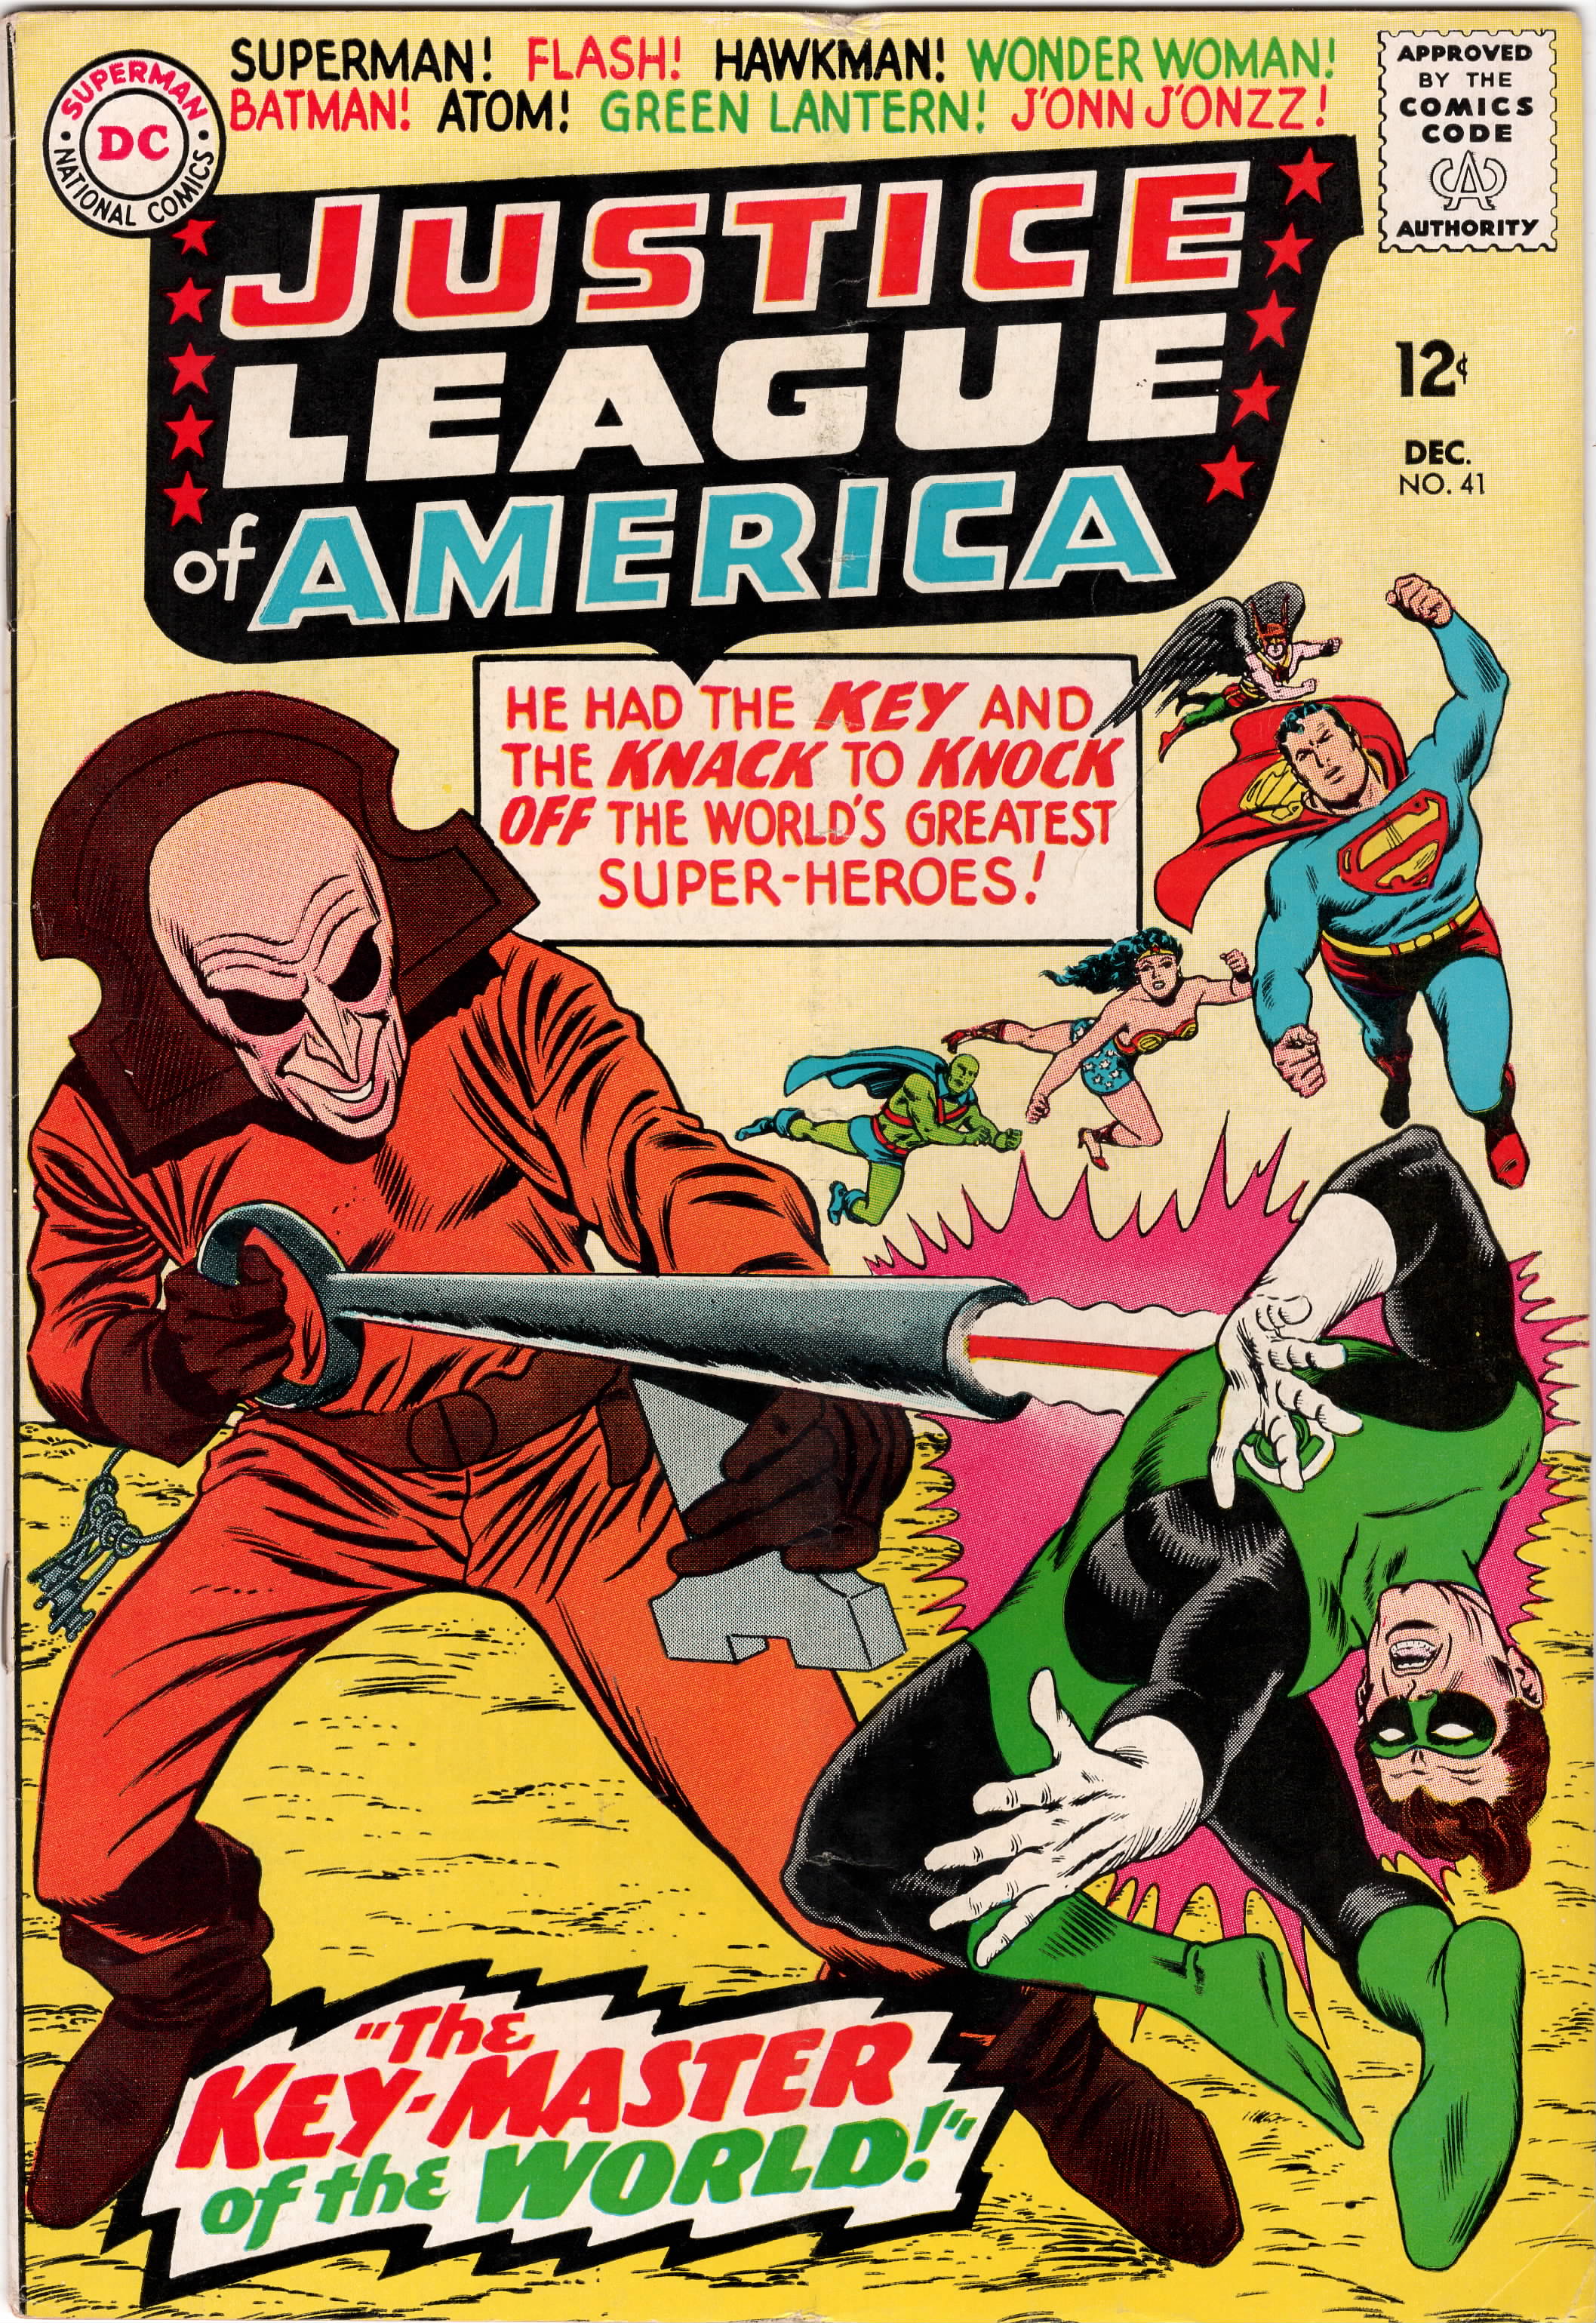 Justice League of America #041